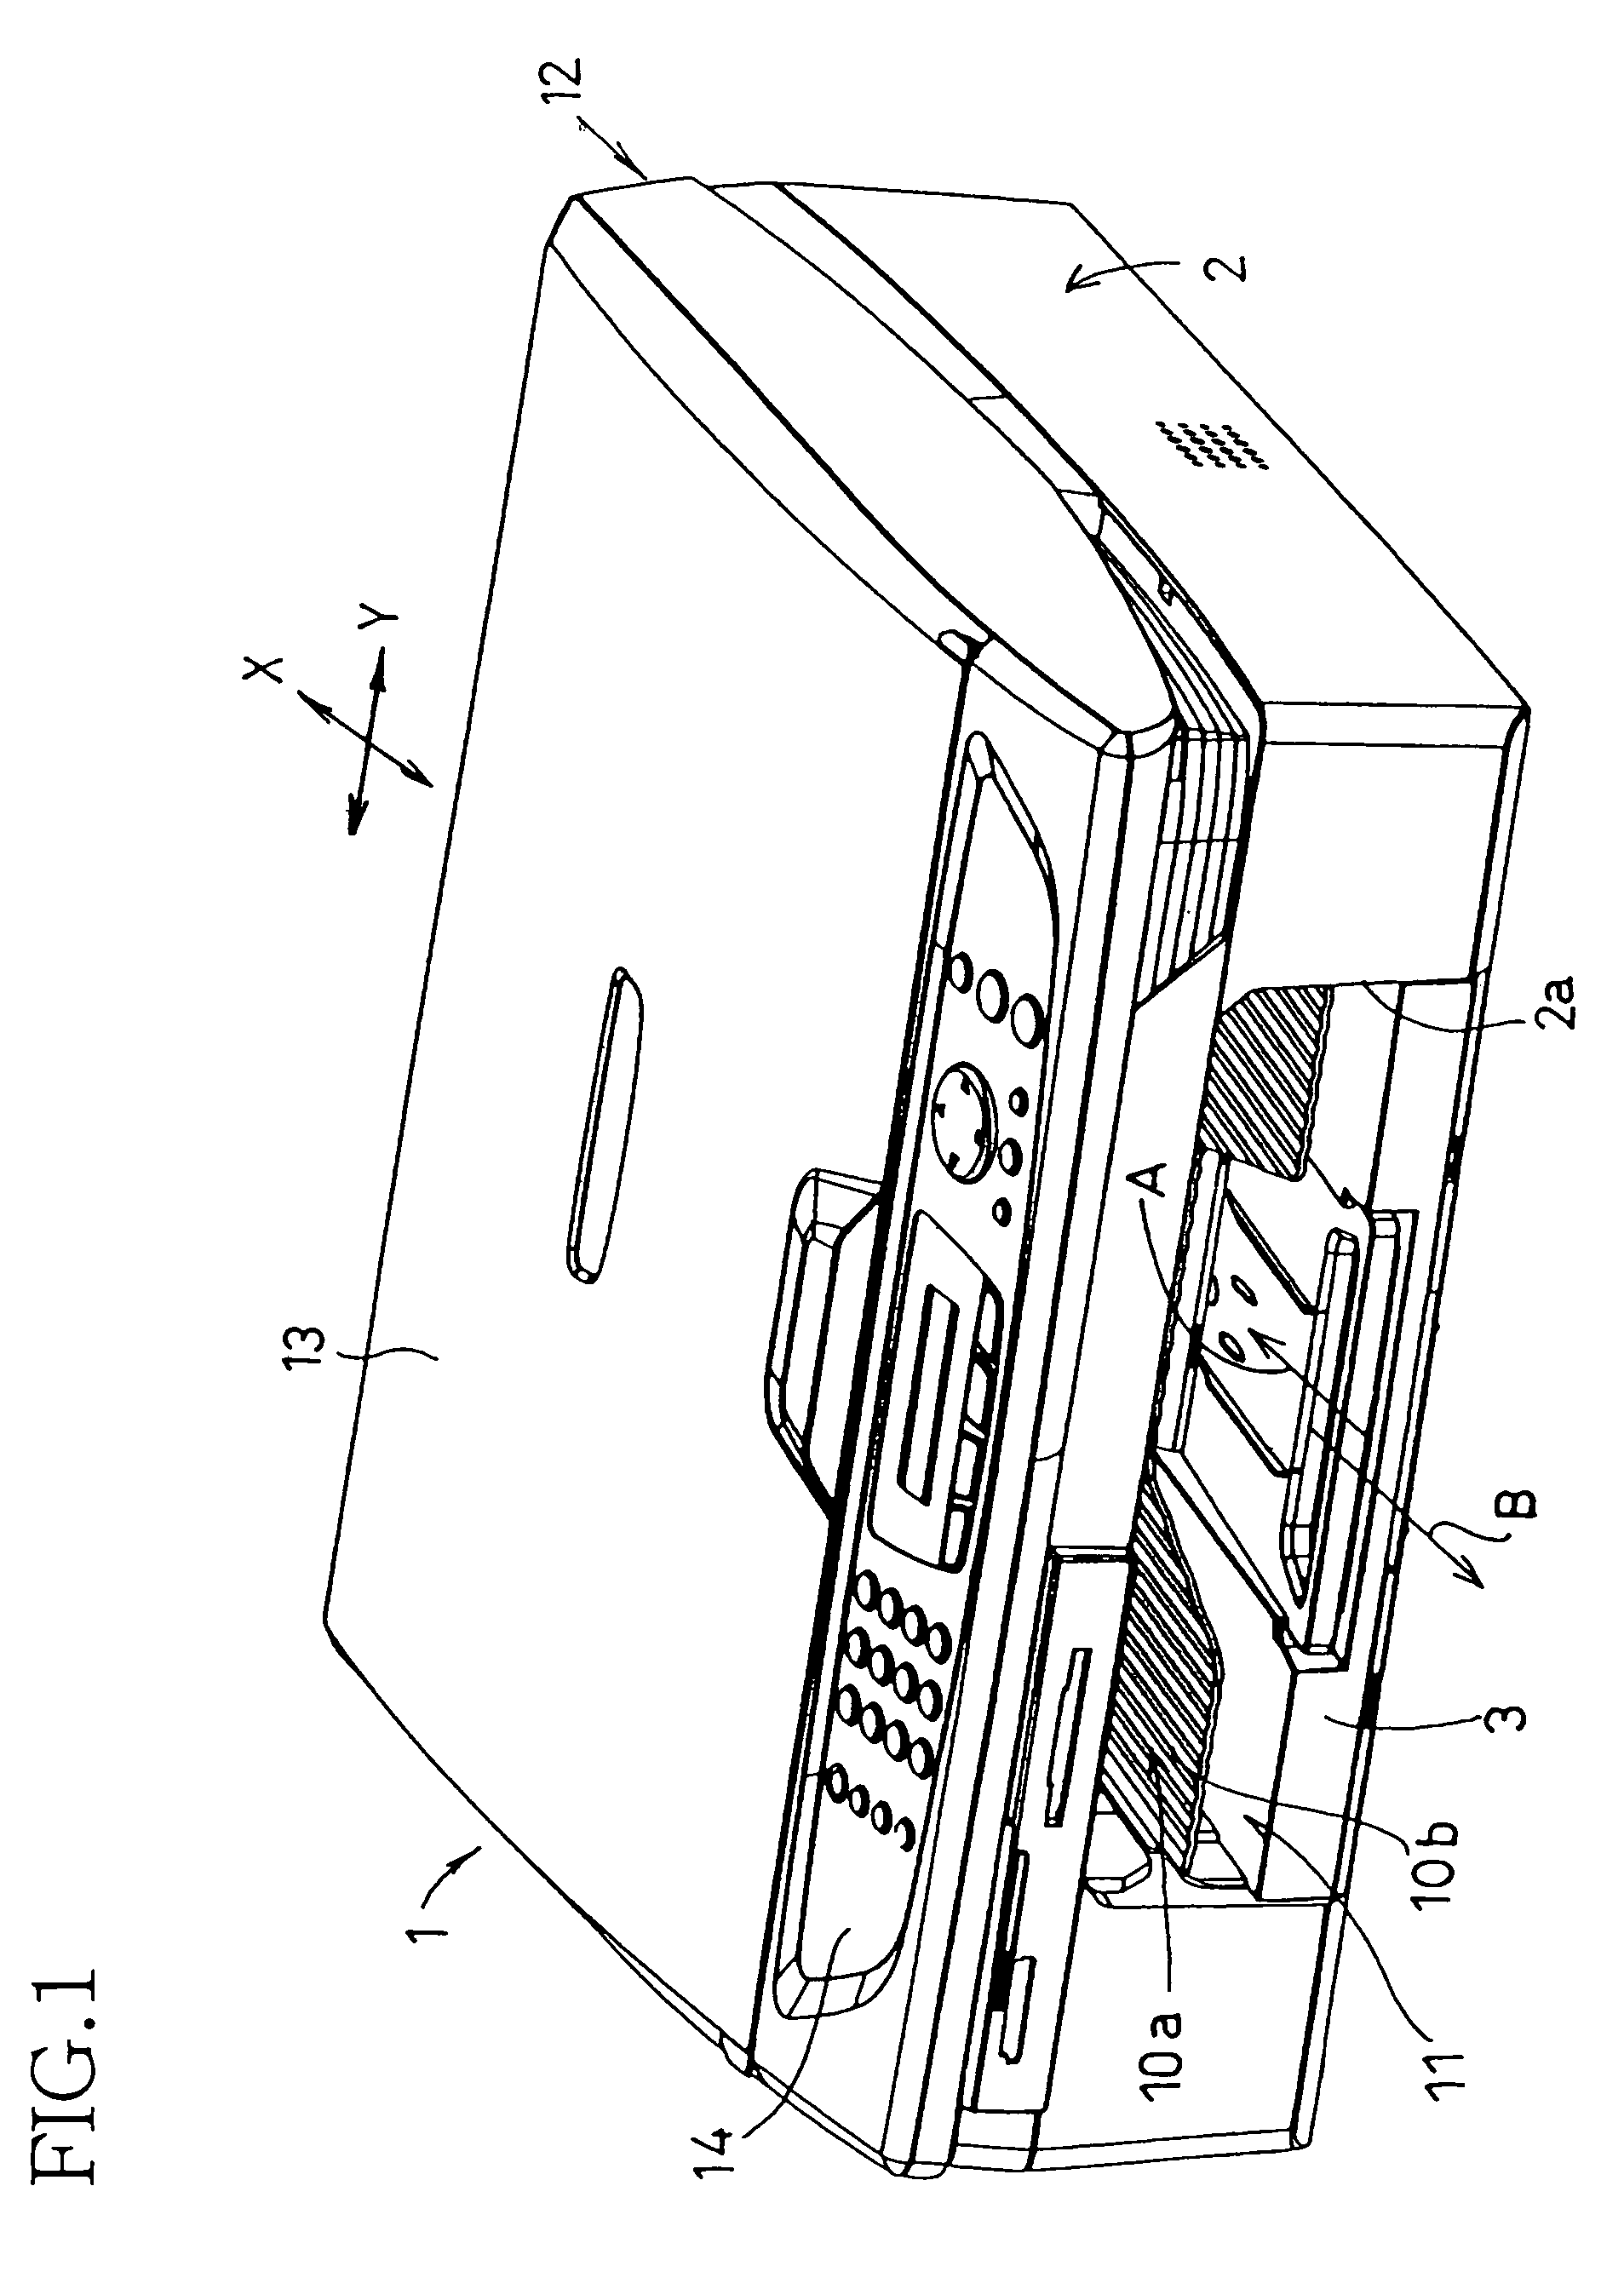 Image recording apparatus